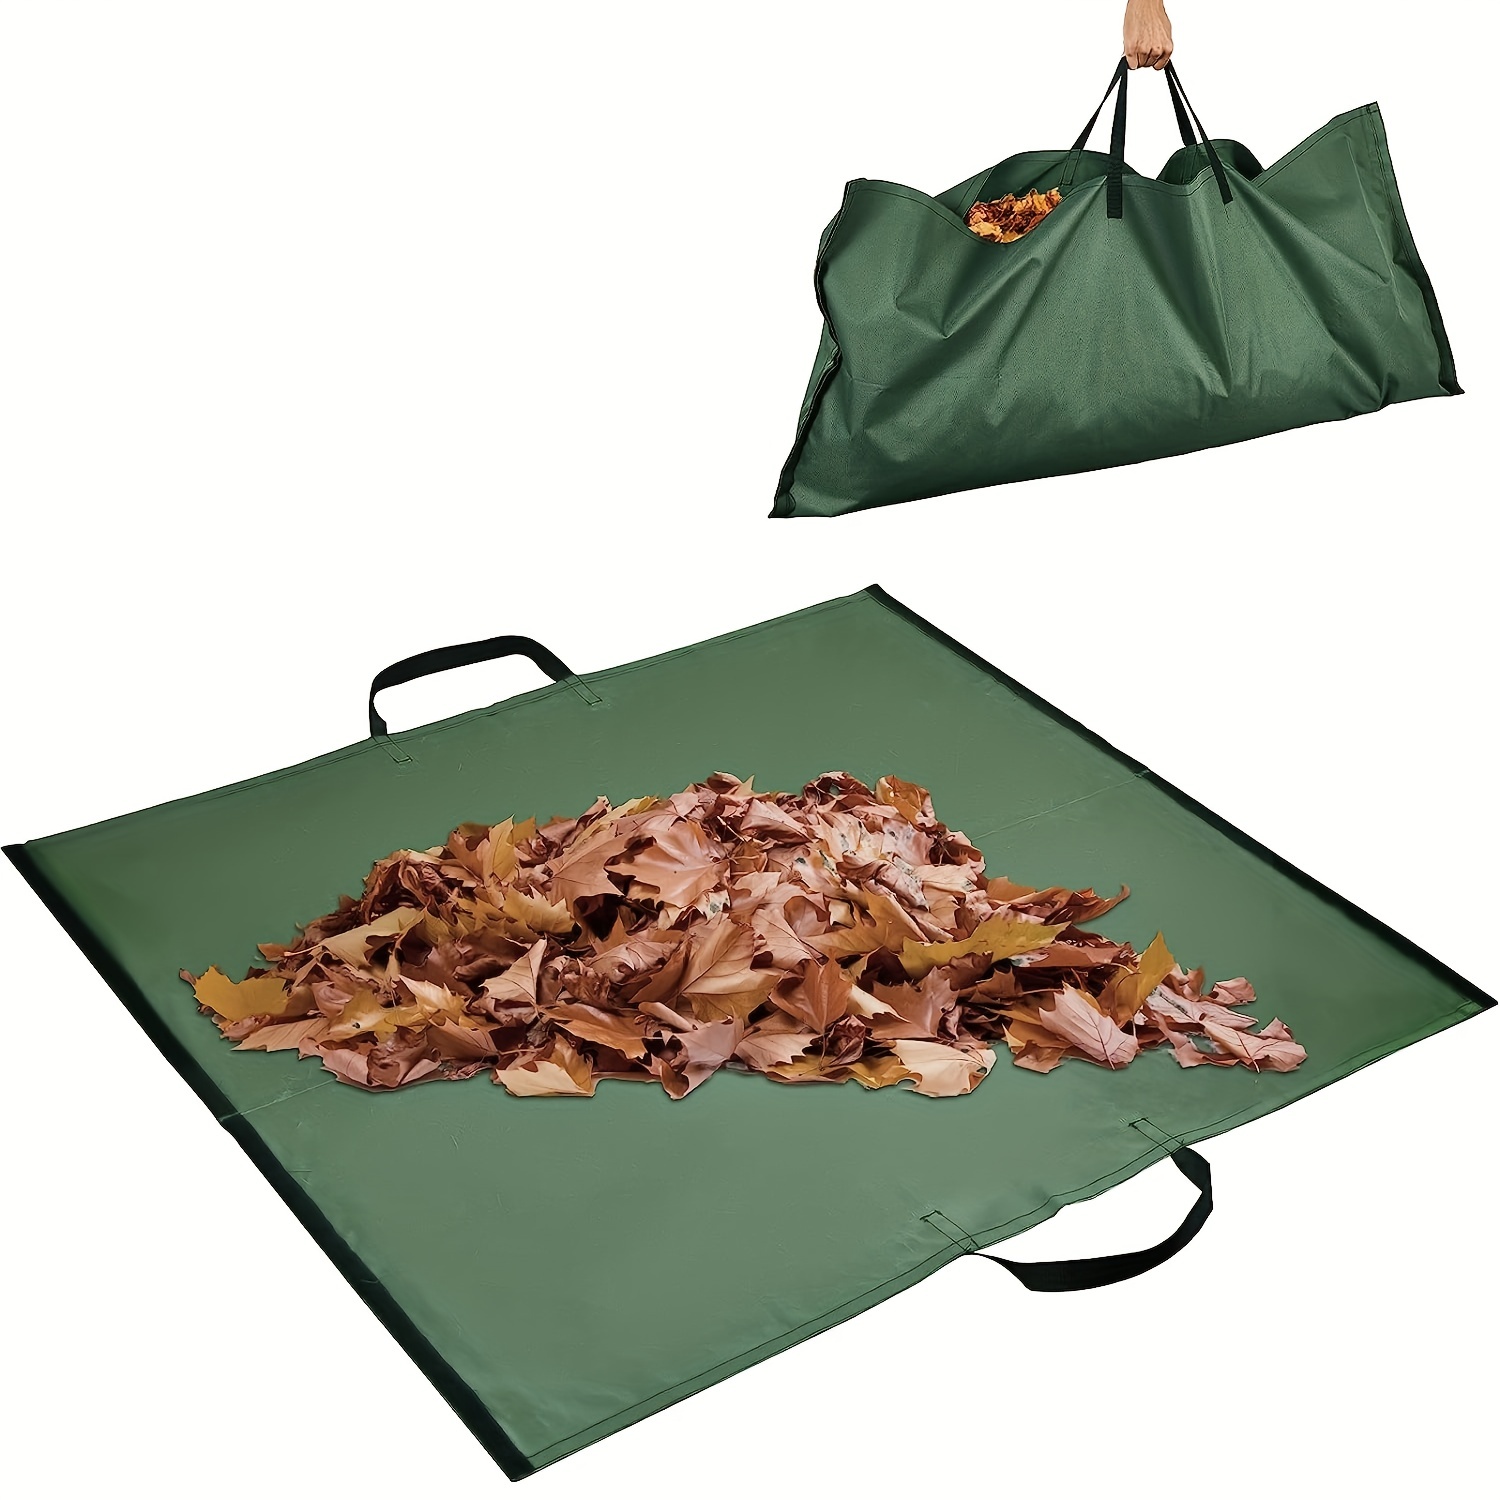 Lawn Garden Bags Yard Waste Bags, Yard Debris Bags, Gardening Bags, Leaf